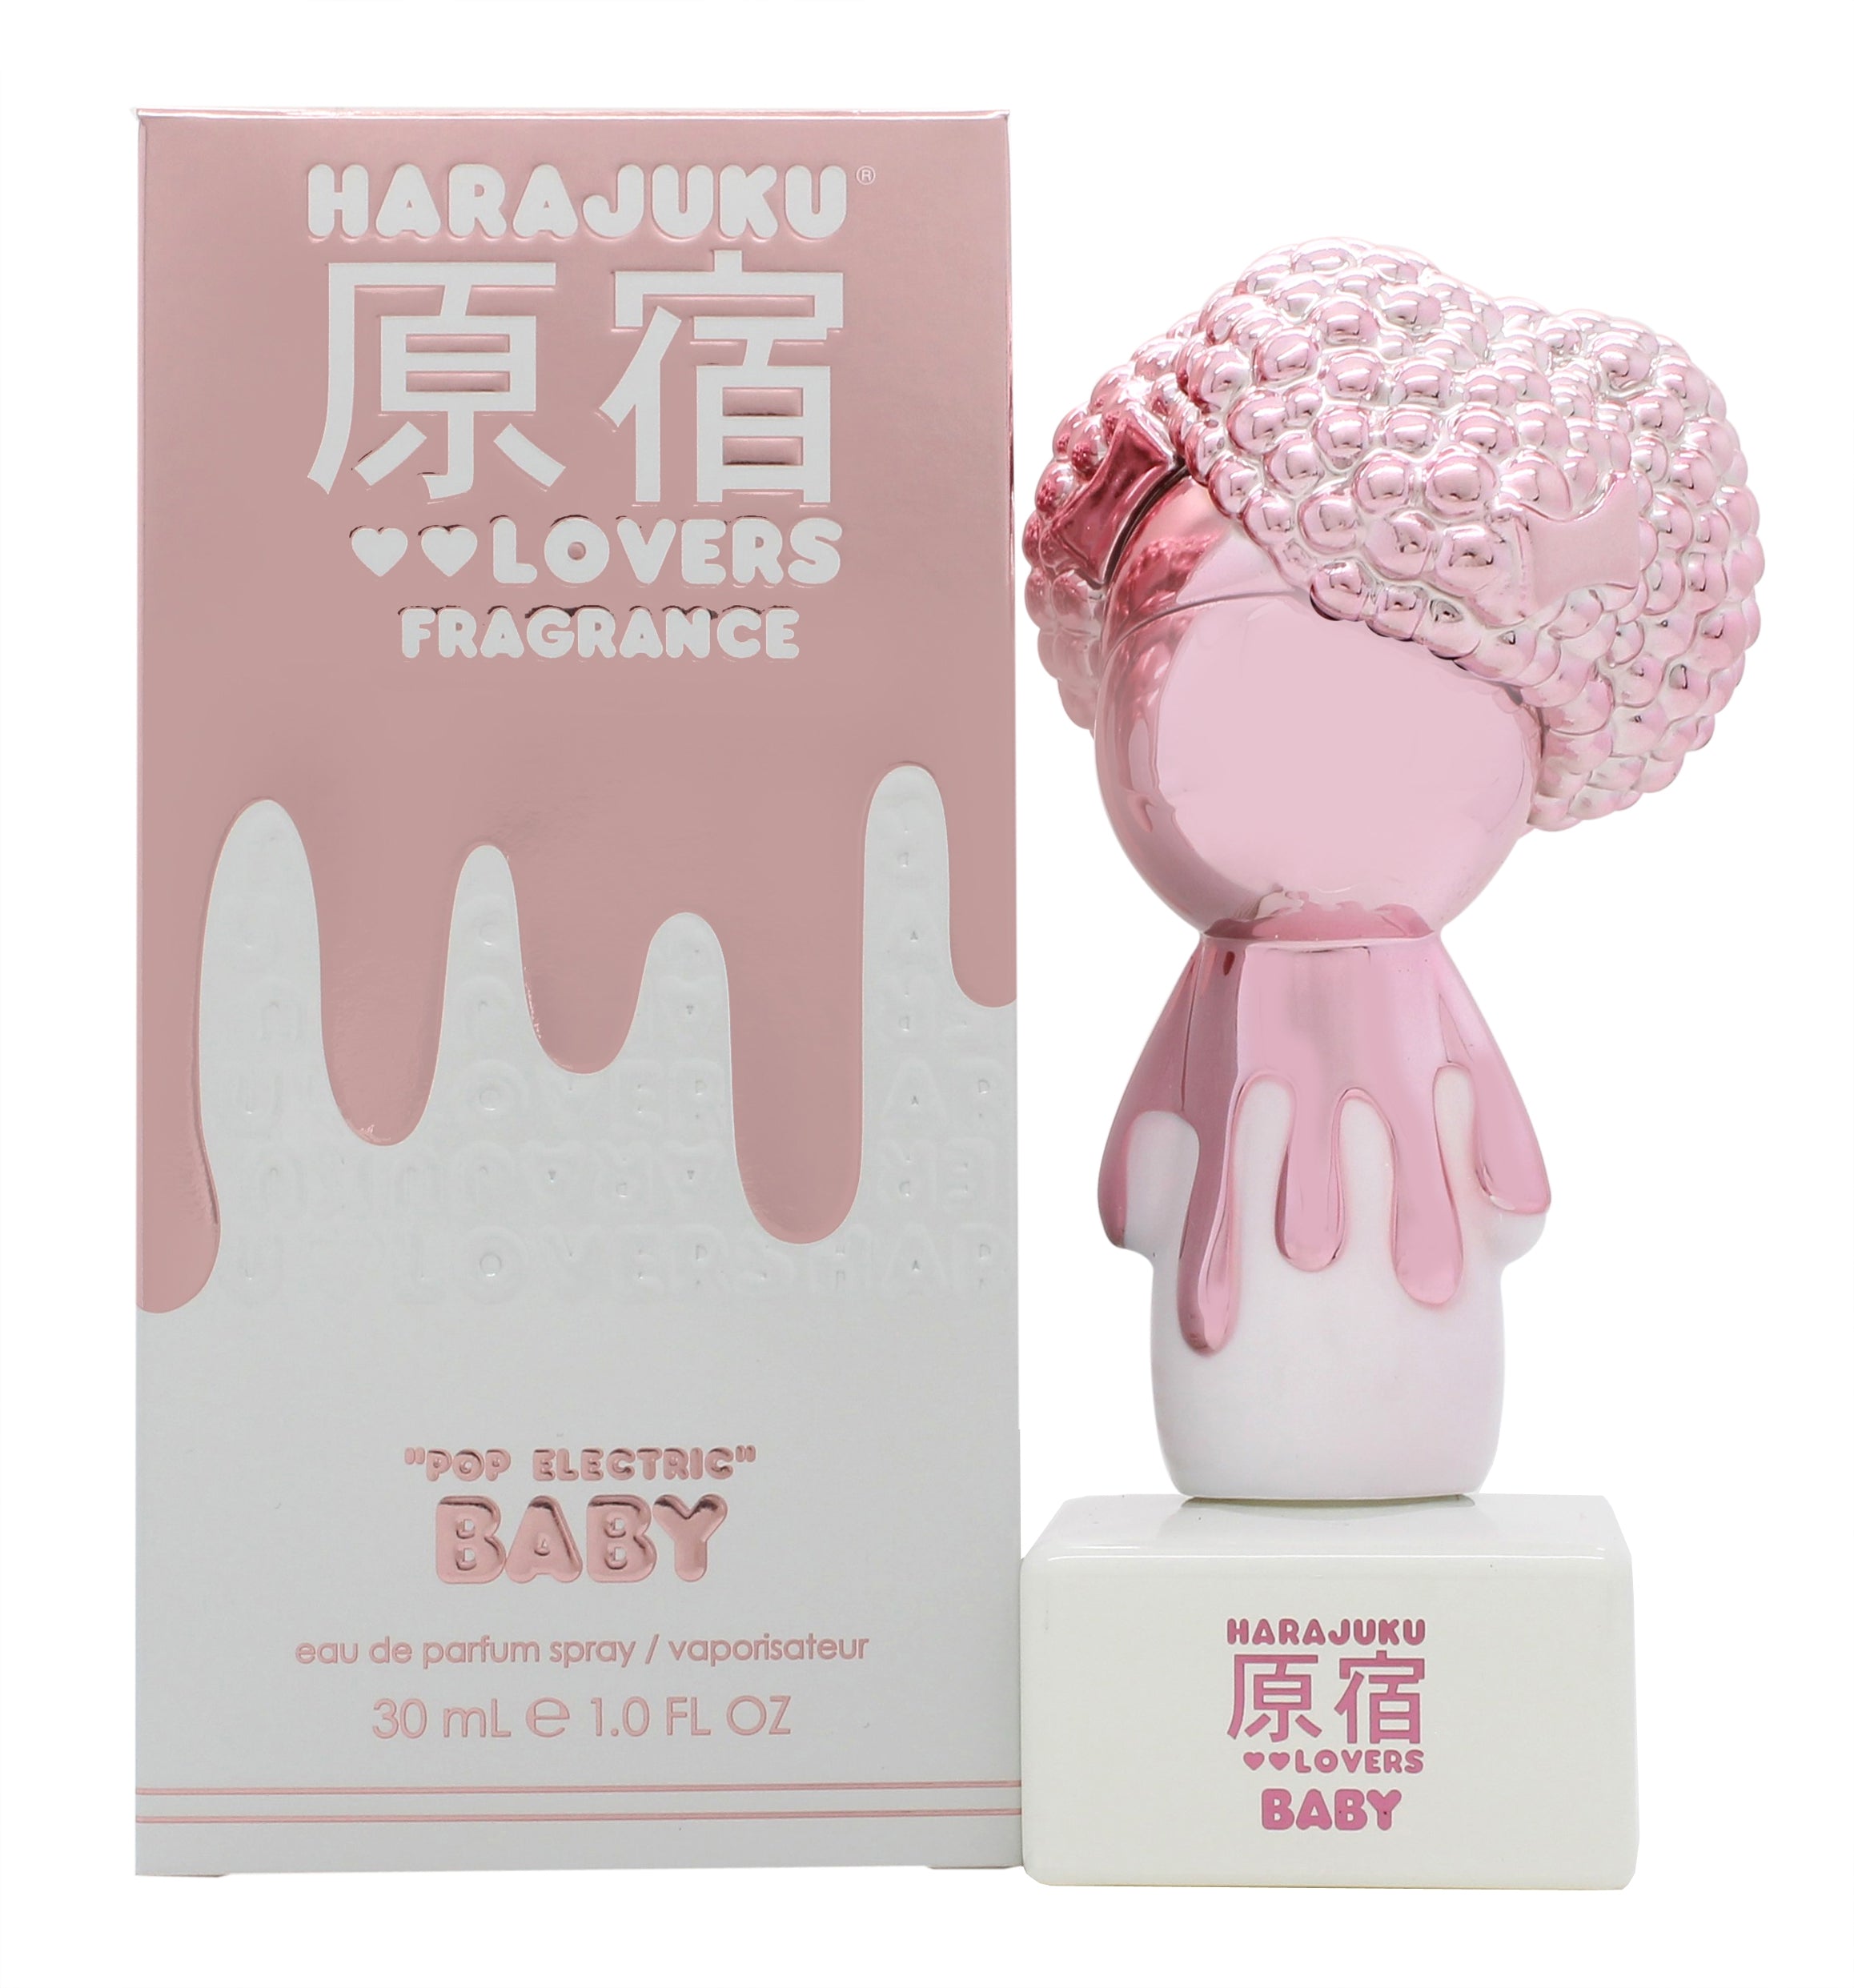 View Gwen Stefani Harajuku Lovers Pop Electric Baby Eau De Parfum 30ml Spray information